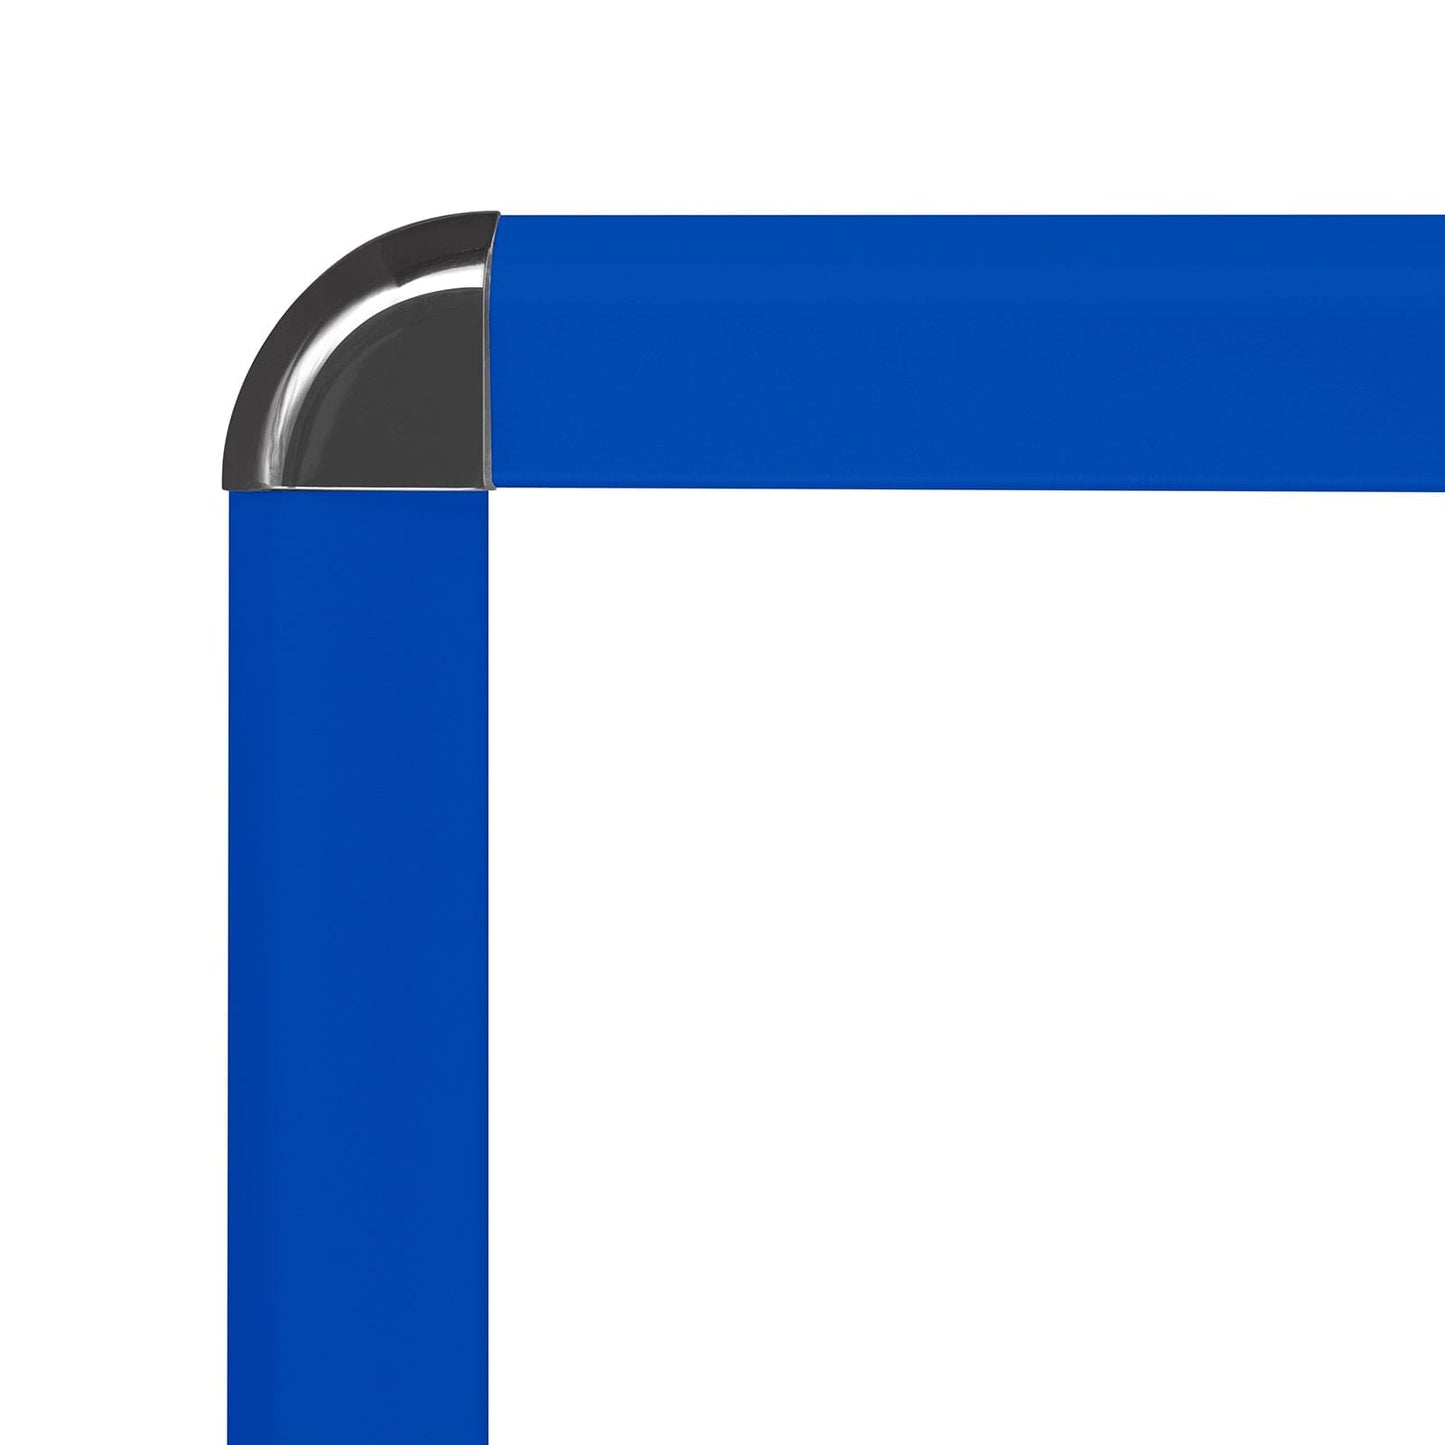 24x30 Blue SnapeZo® Sidewalk Sign - 1.25" Profile - Snap Frames Direct